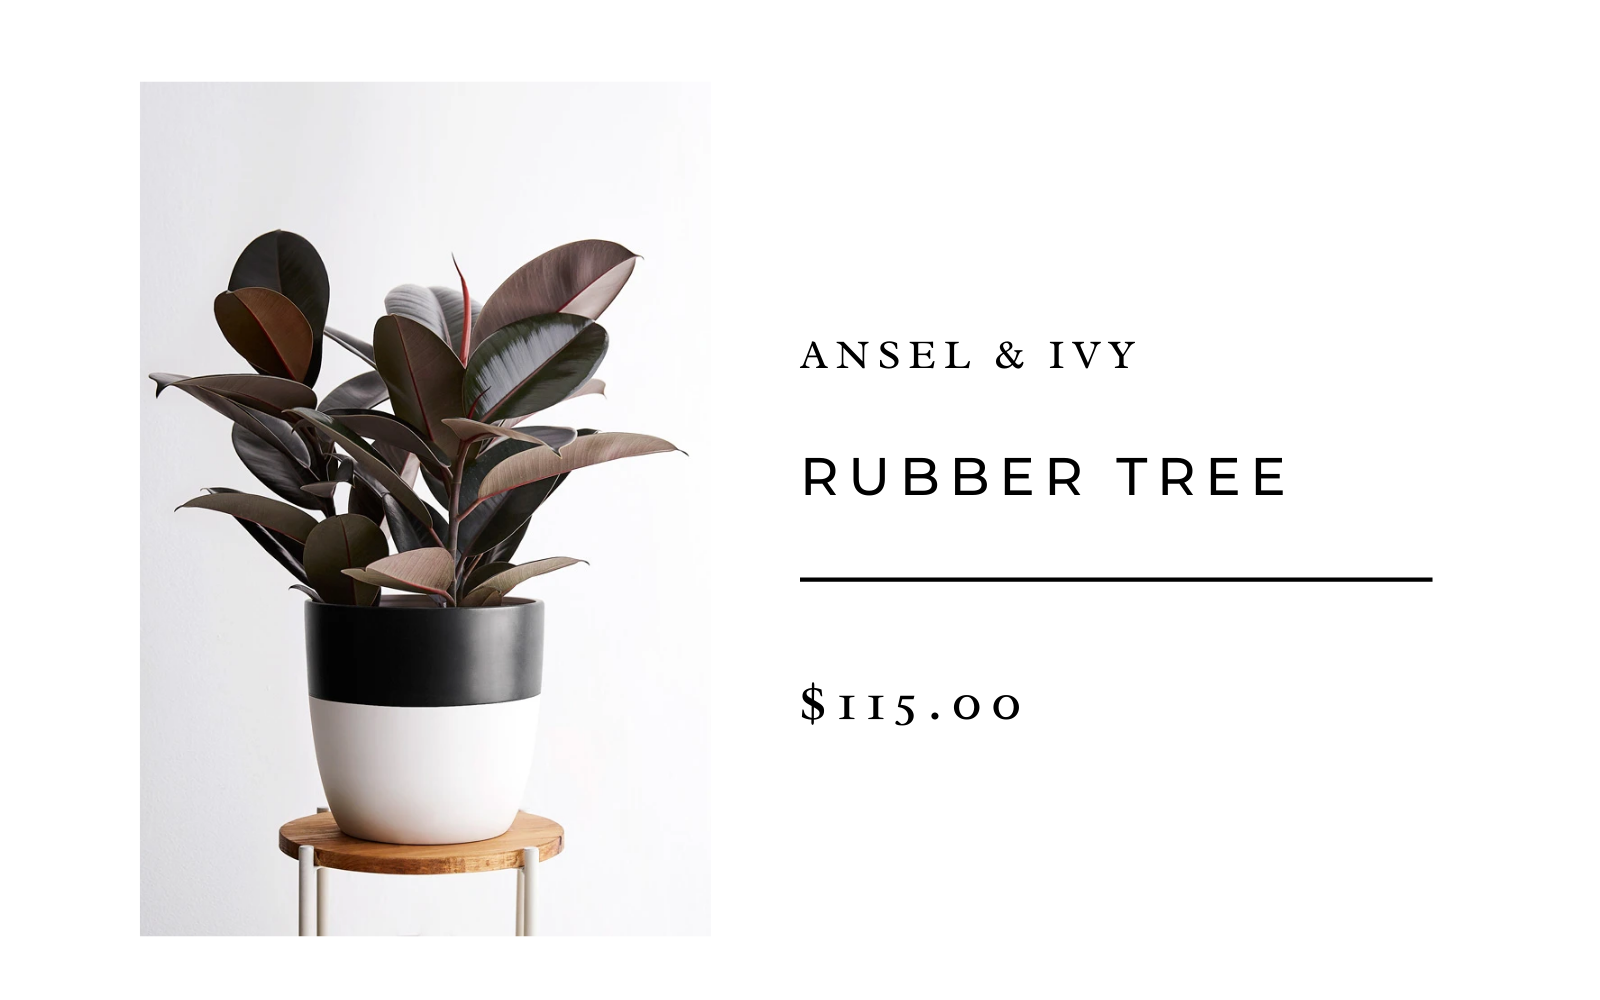 rubber tree